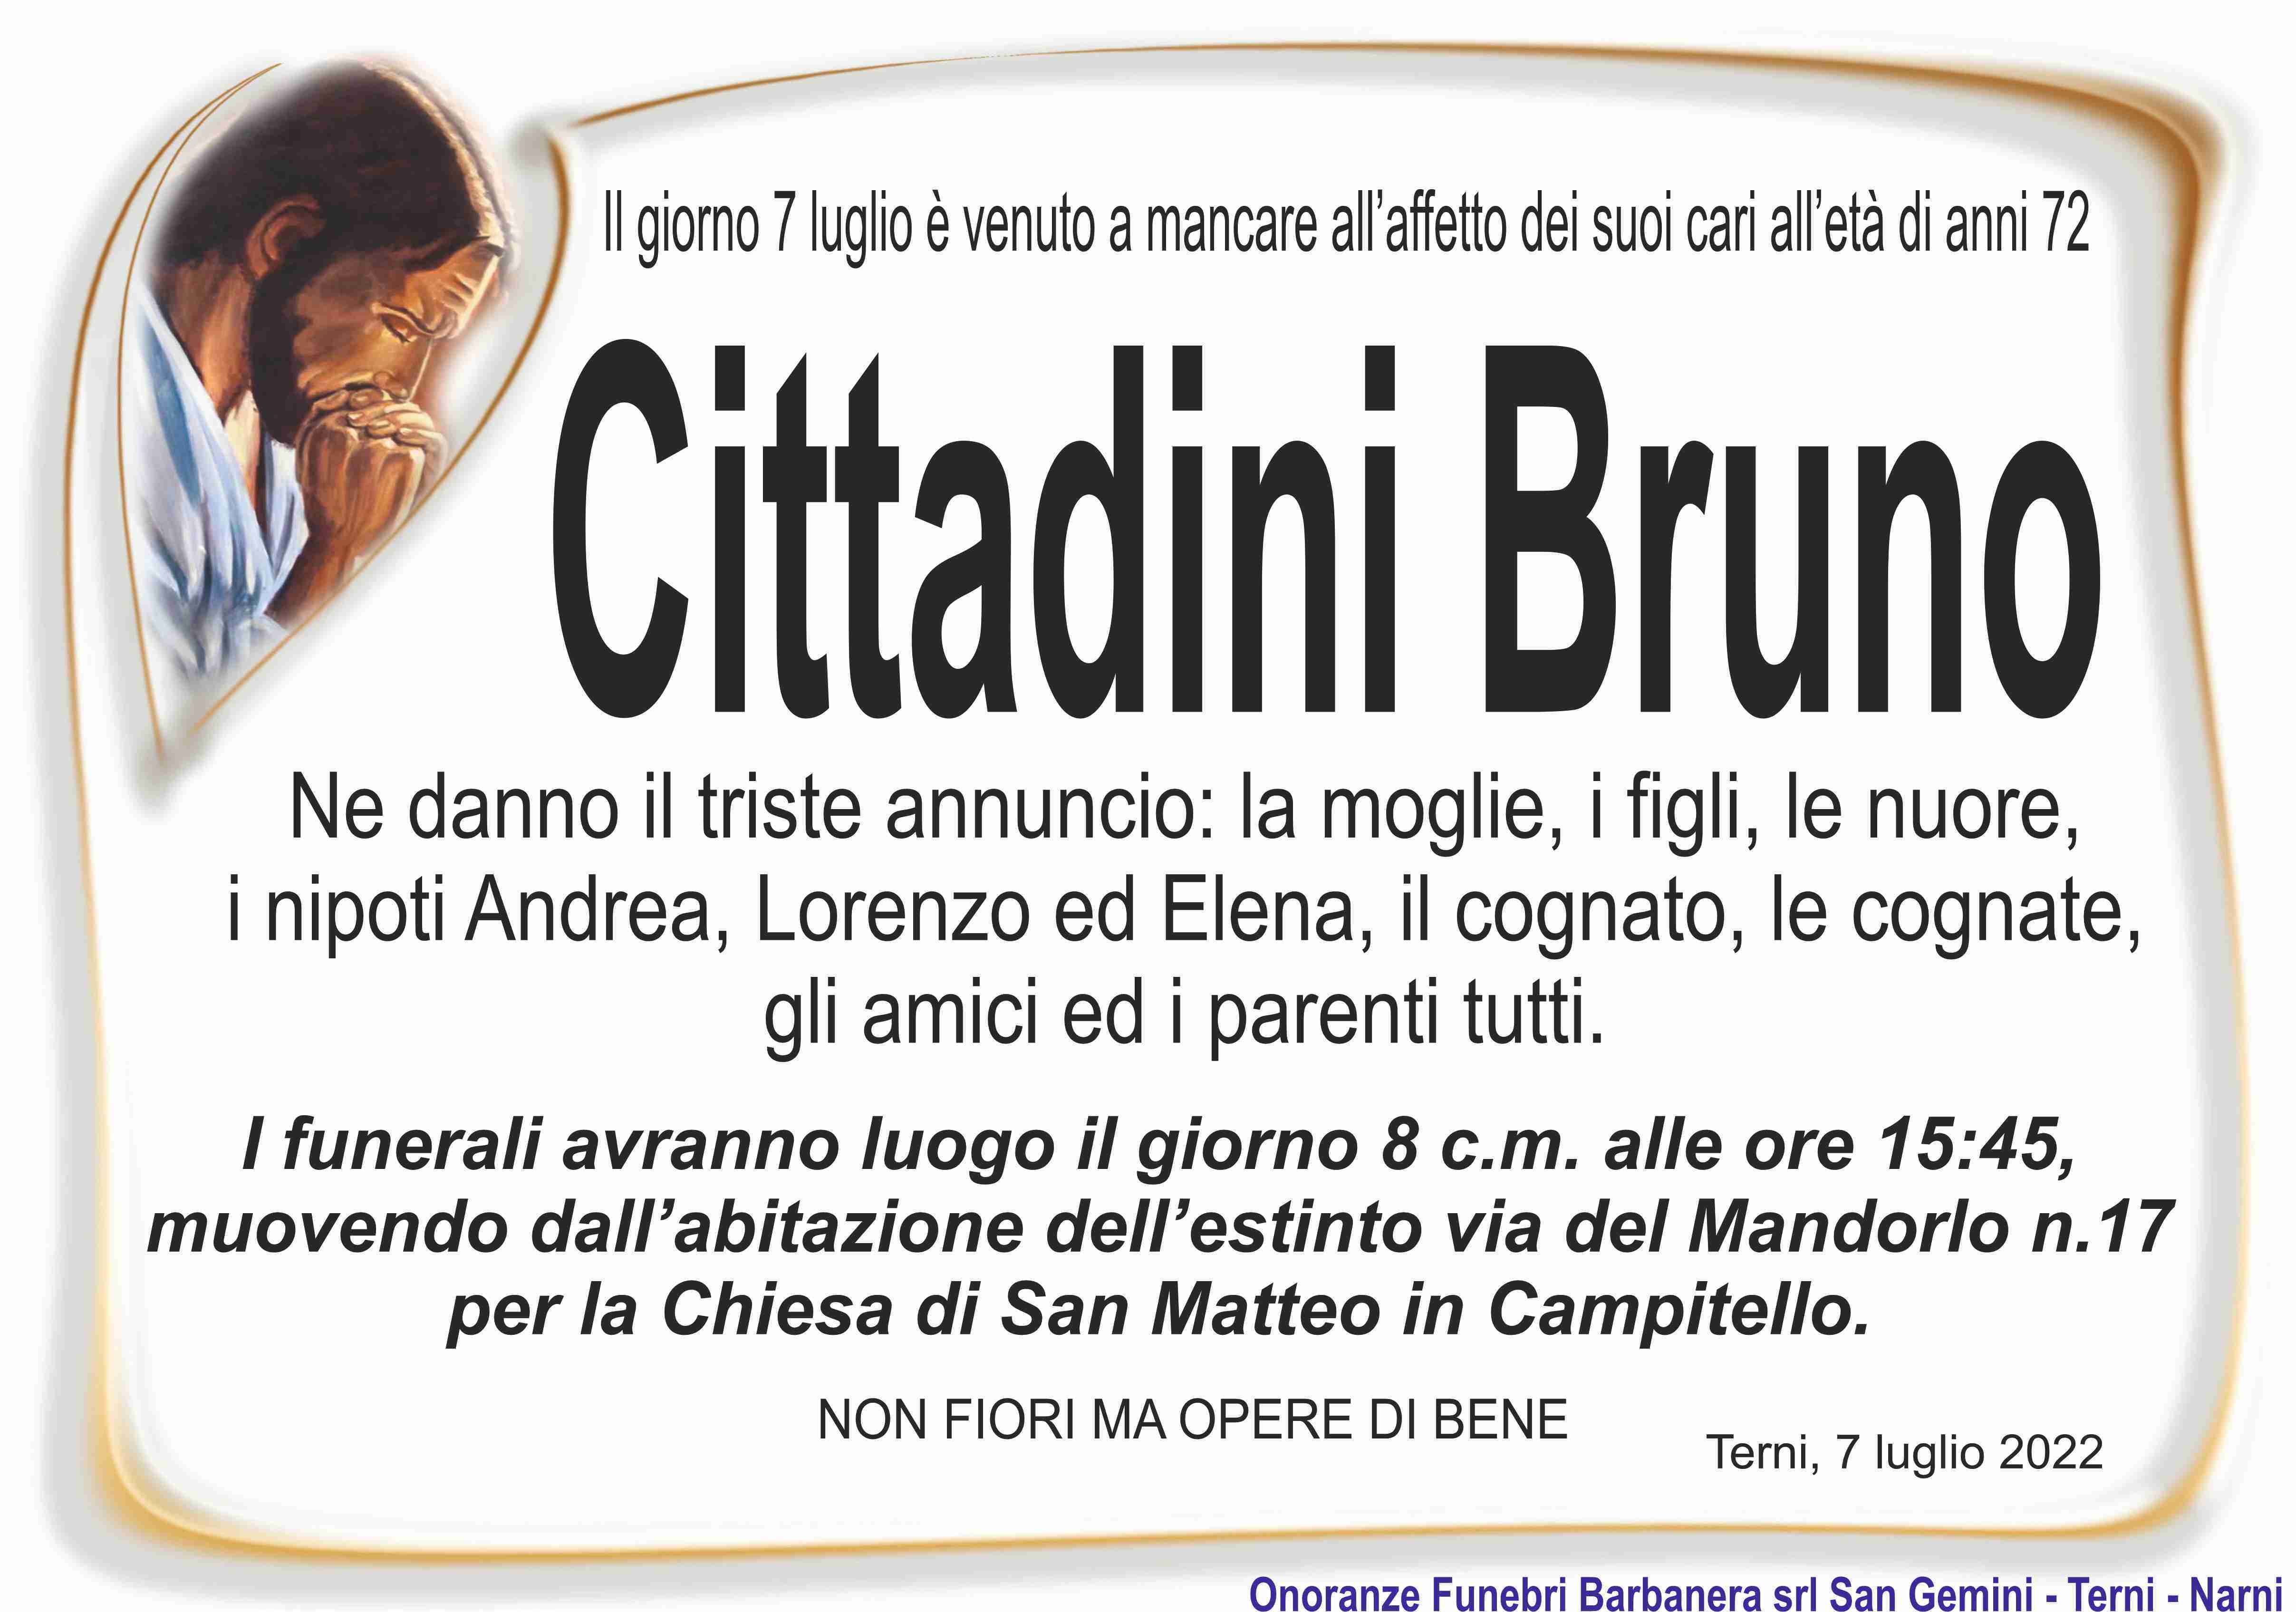 Bruno Cittadini